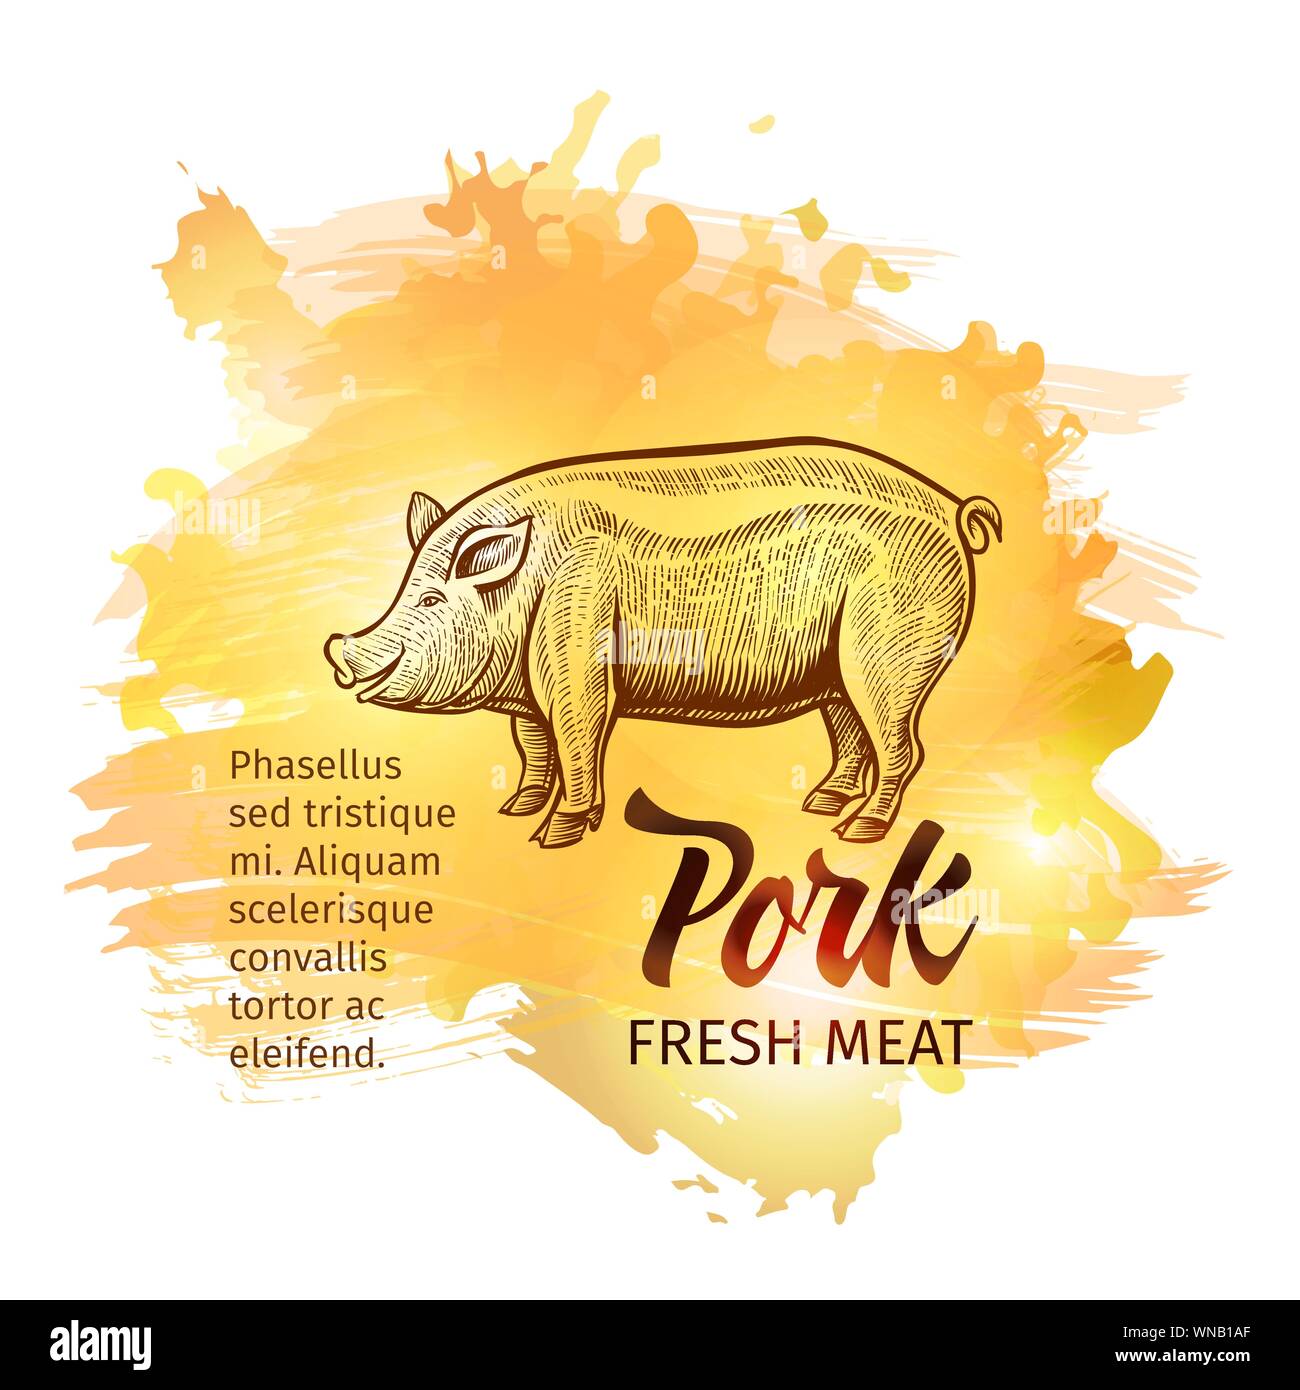 Hand drawn sketch Pig. Pork Fresh Meat handdrawn background for restaurant menu design. Vector vintage illustration with yellow splashes Stock Vector